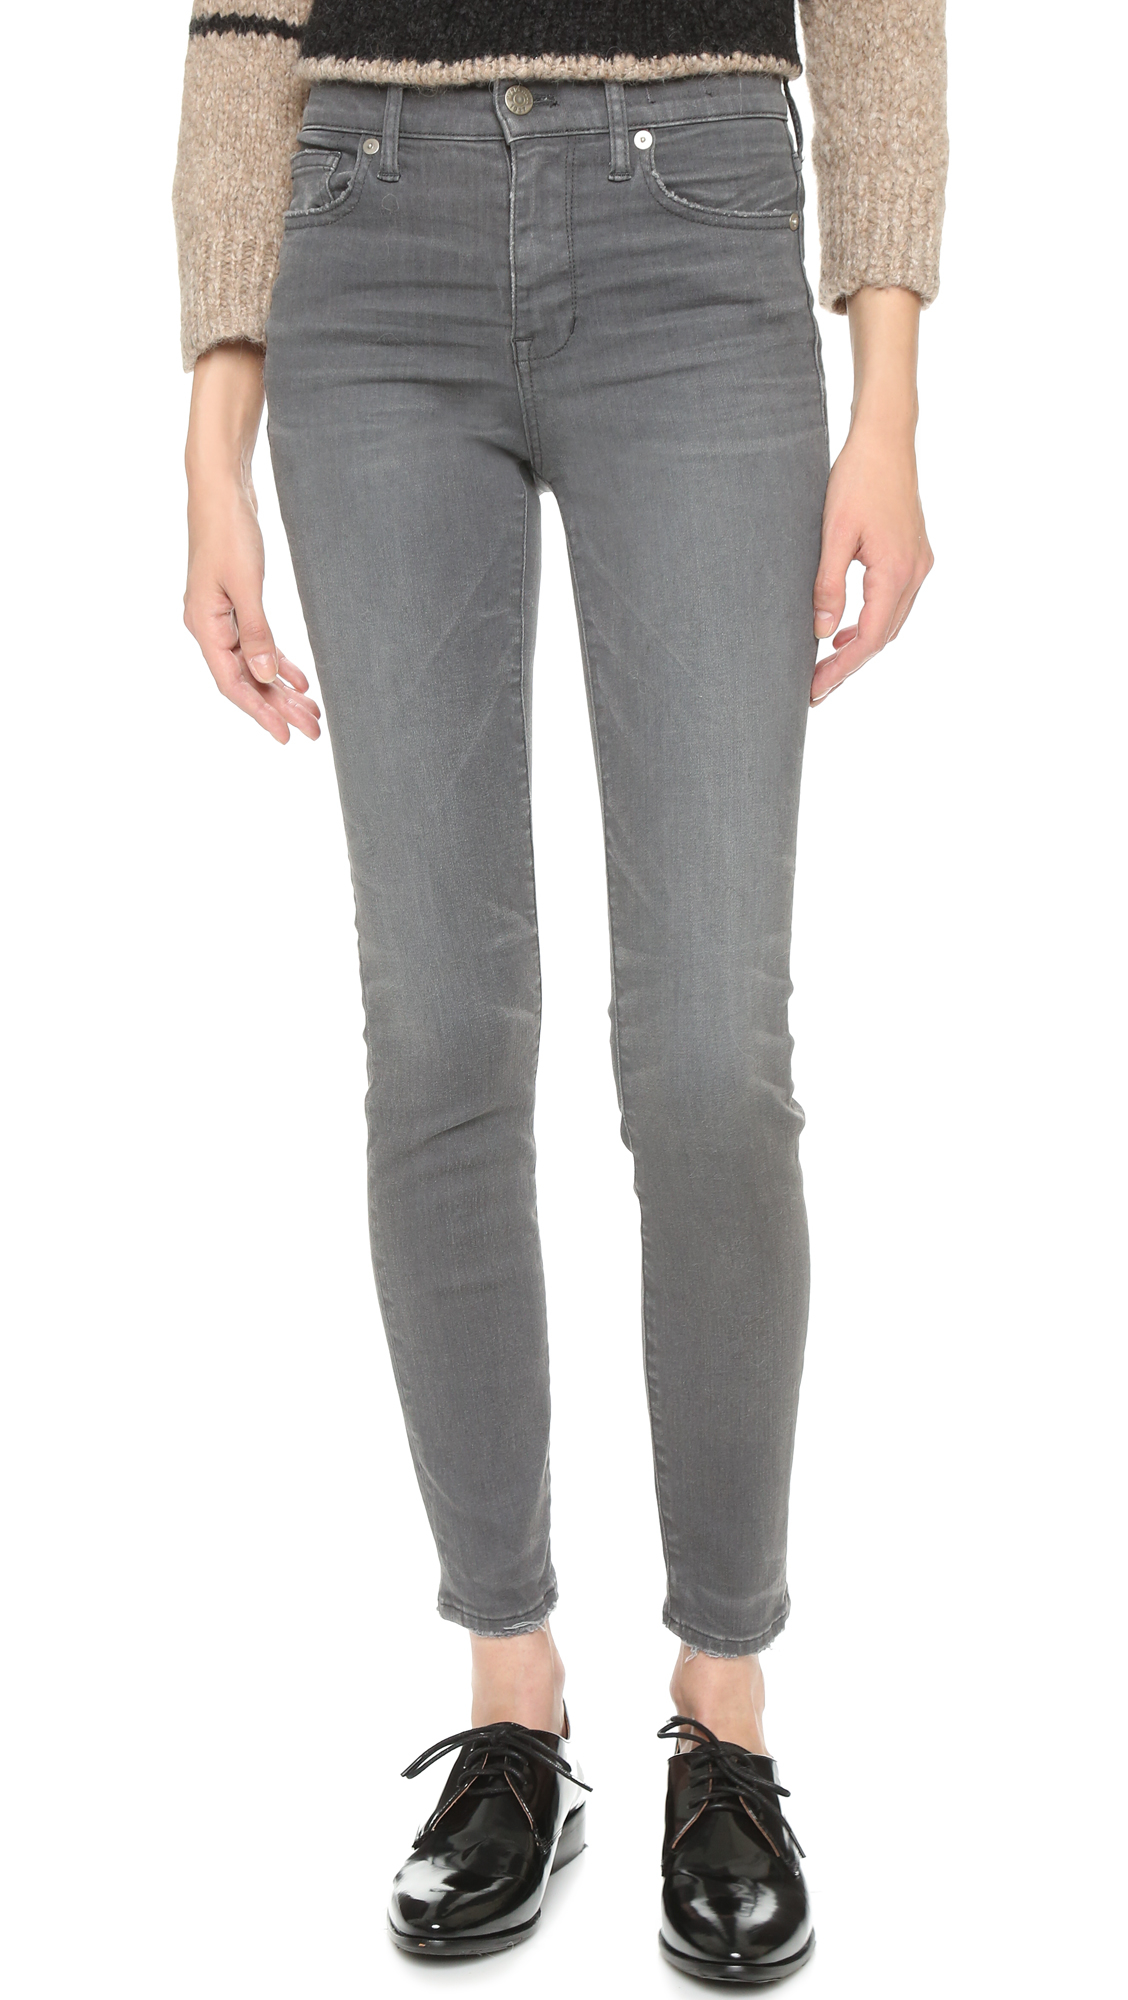 Lyst - Madewell High Riser Skinny Jeans - Dusty Grey in Gray